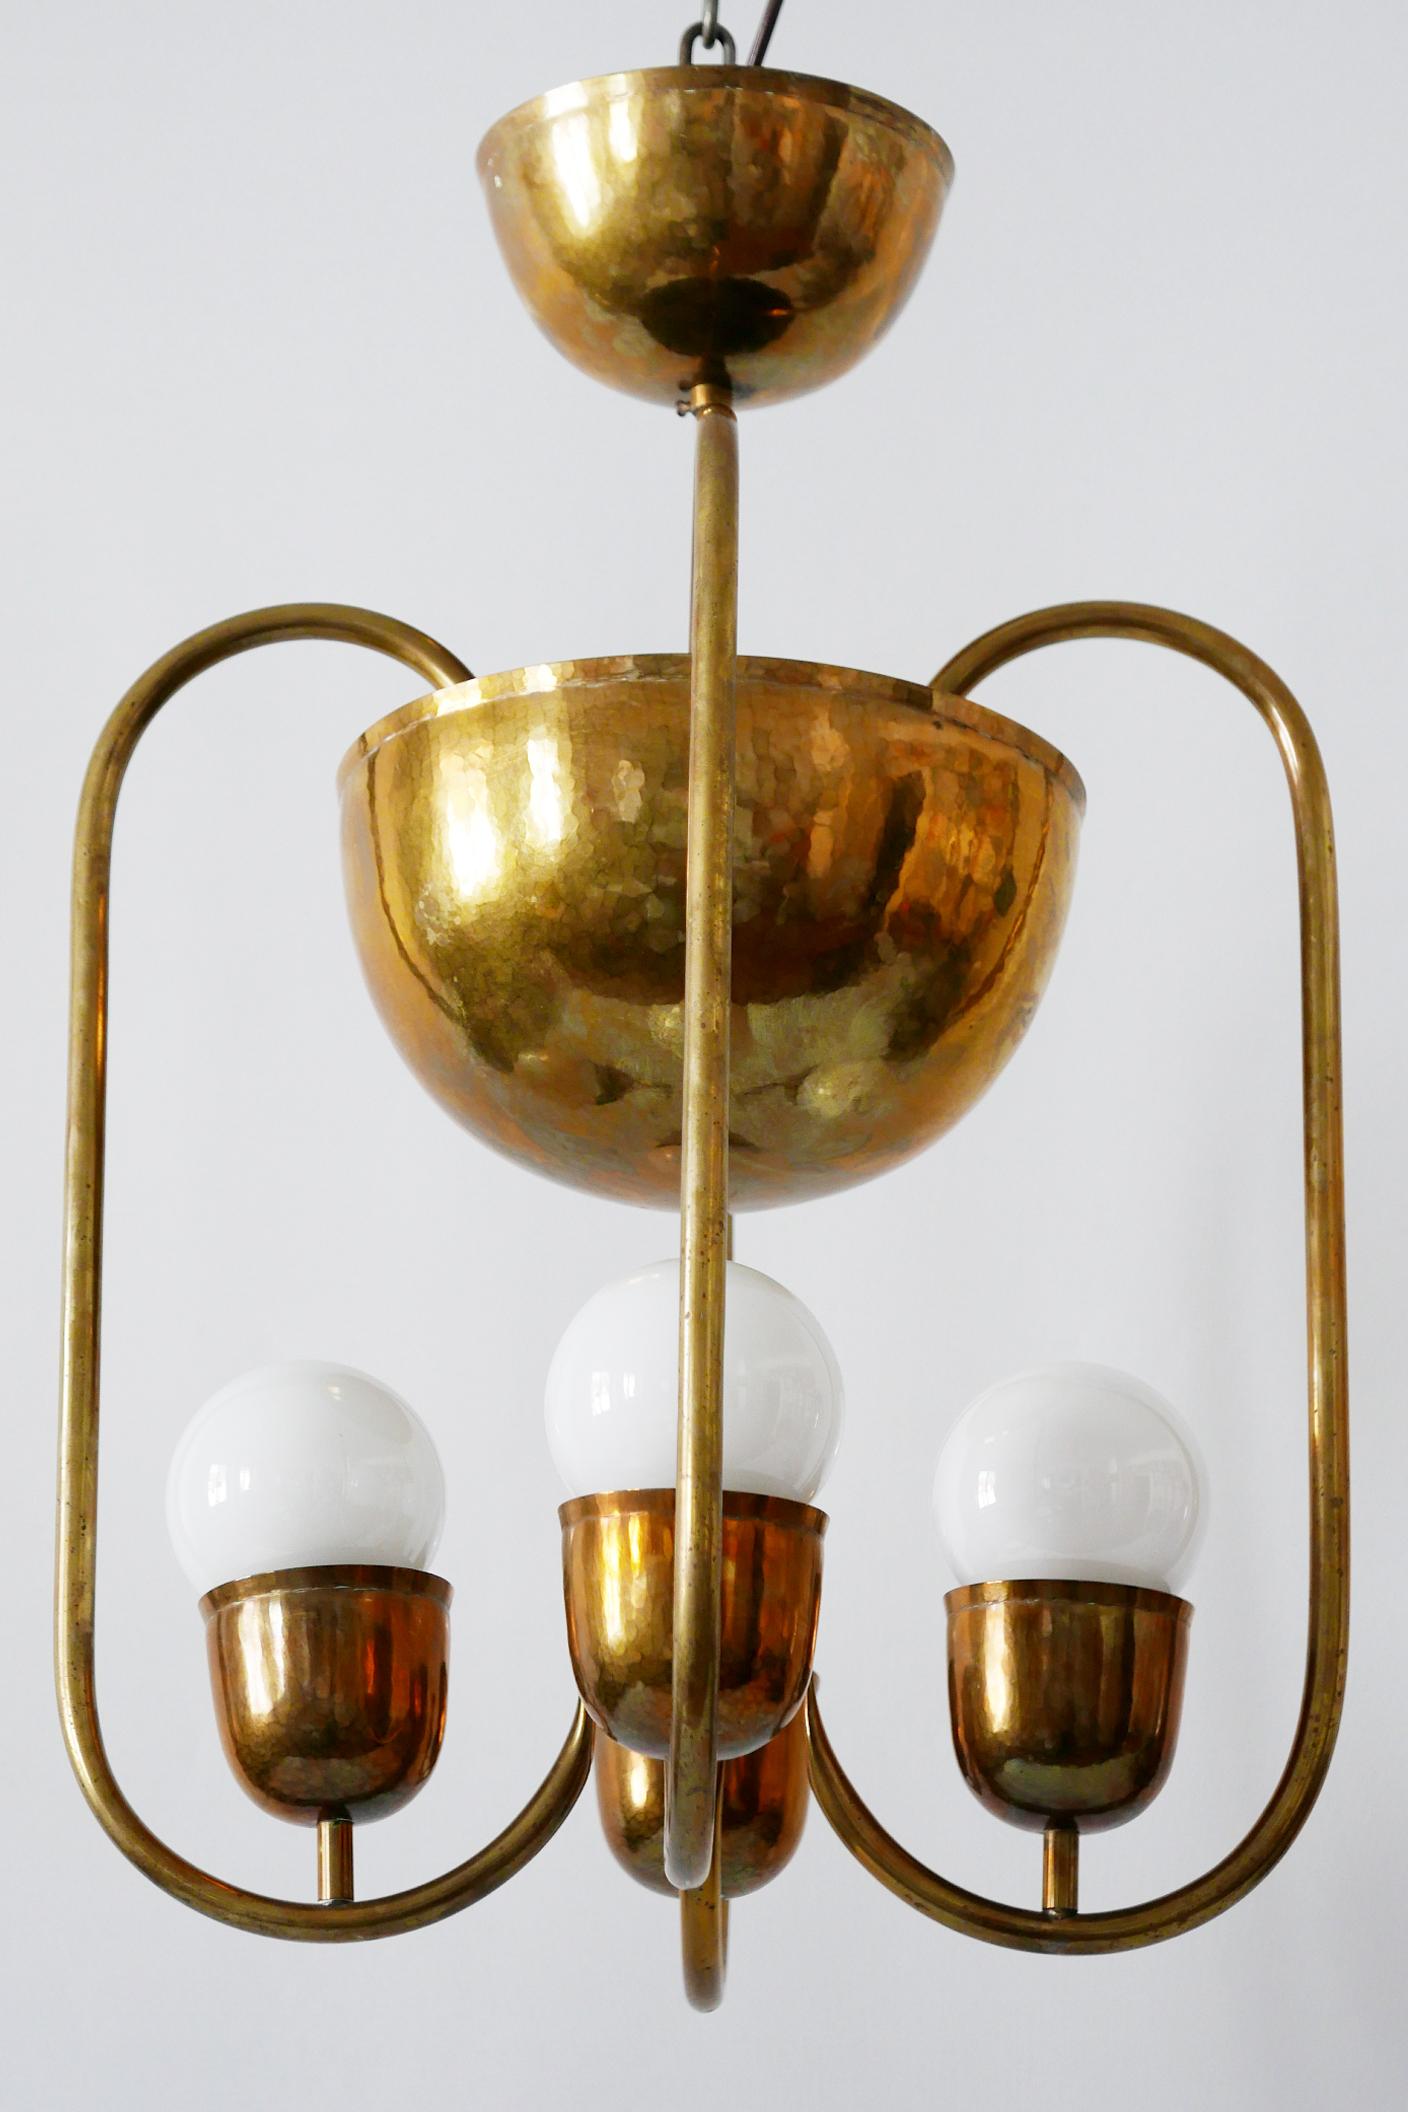 Unique Bauhaus Art Deco Brass Chandelier or Pendant Lamp by Hayno Focken 1930s For Sale 1